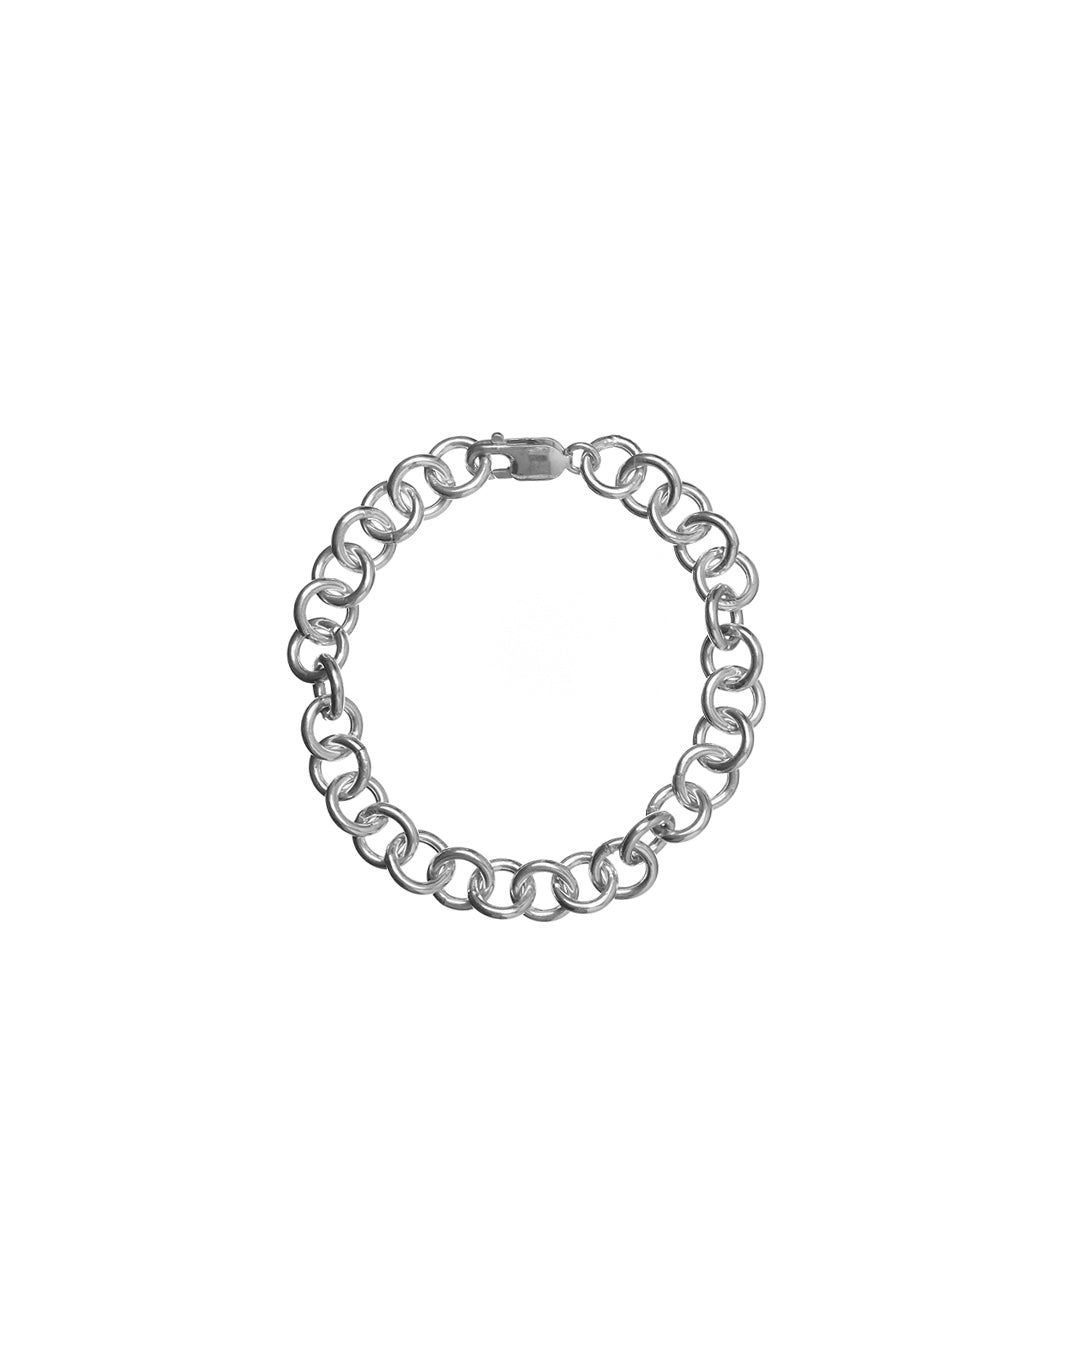 Nicometals - Round Link Bracelet